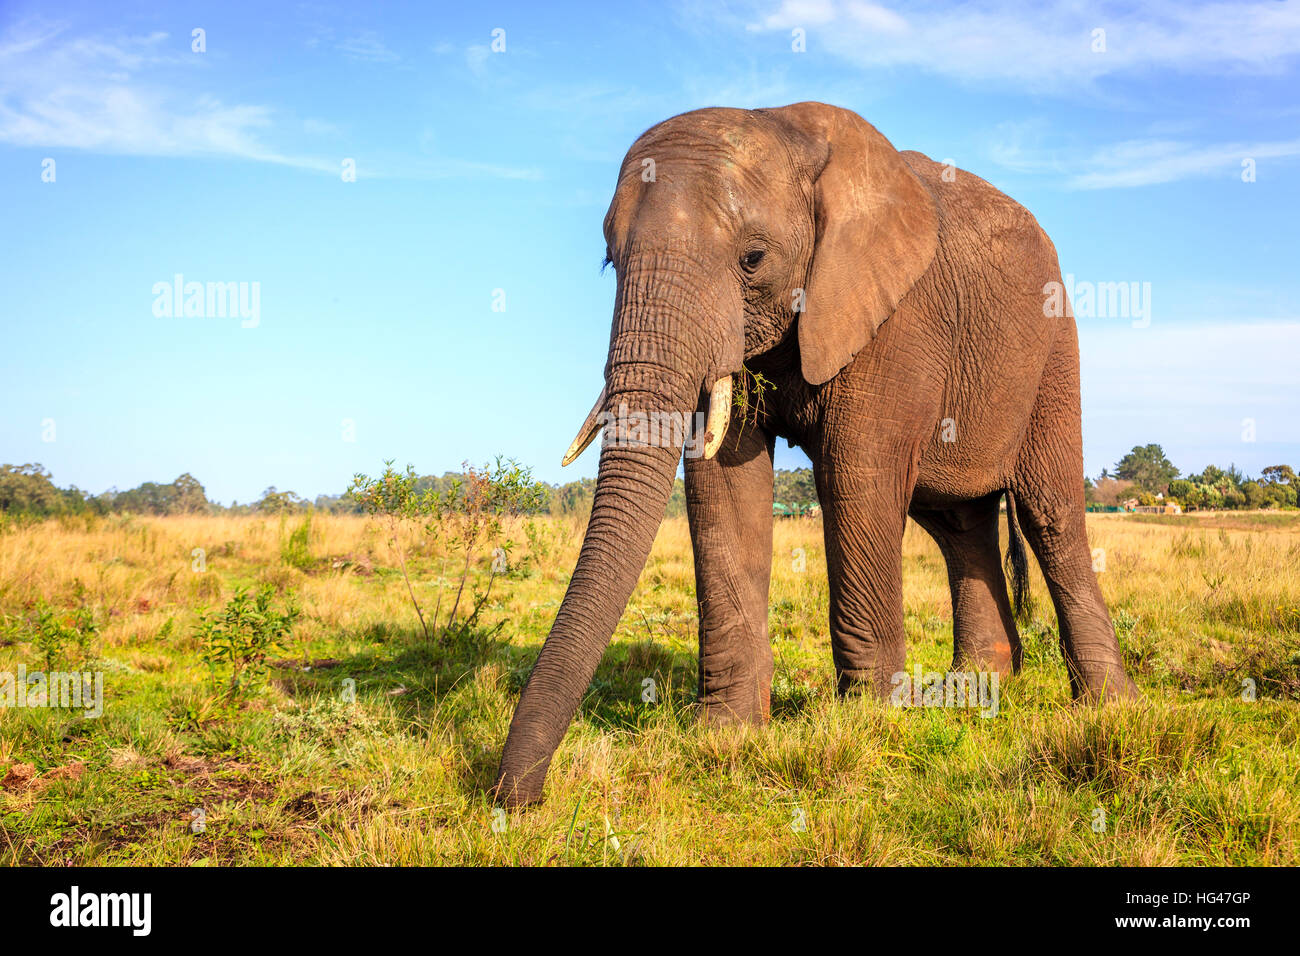 Rescued elephant in Knysna Elephant Park, South Africa Stock Photo